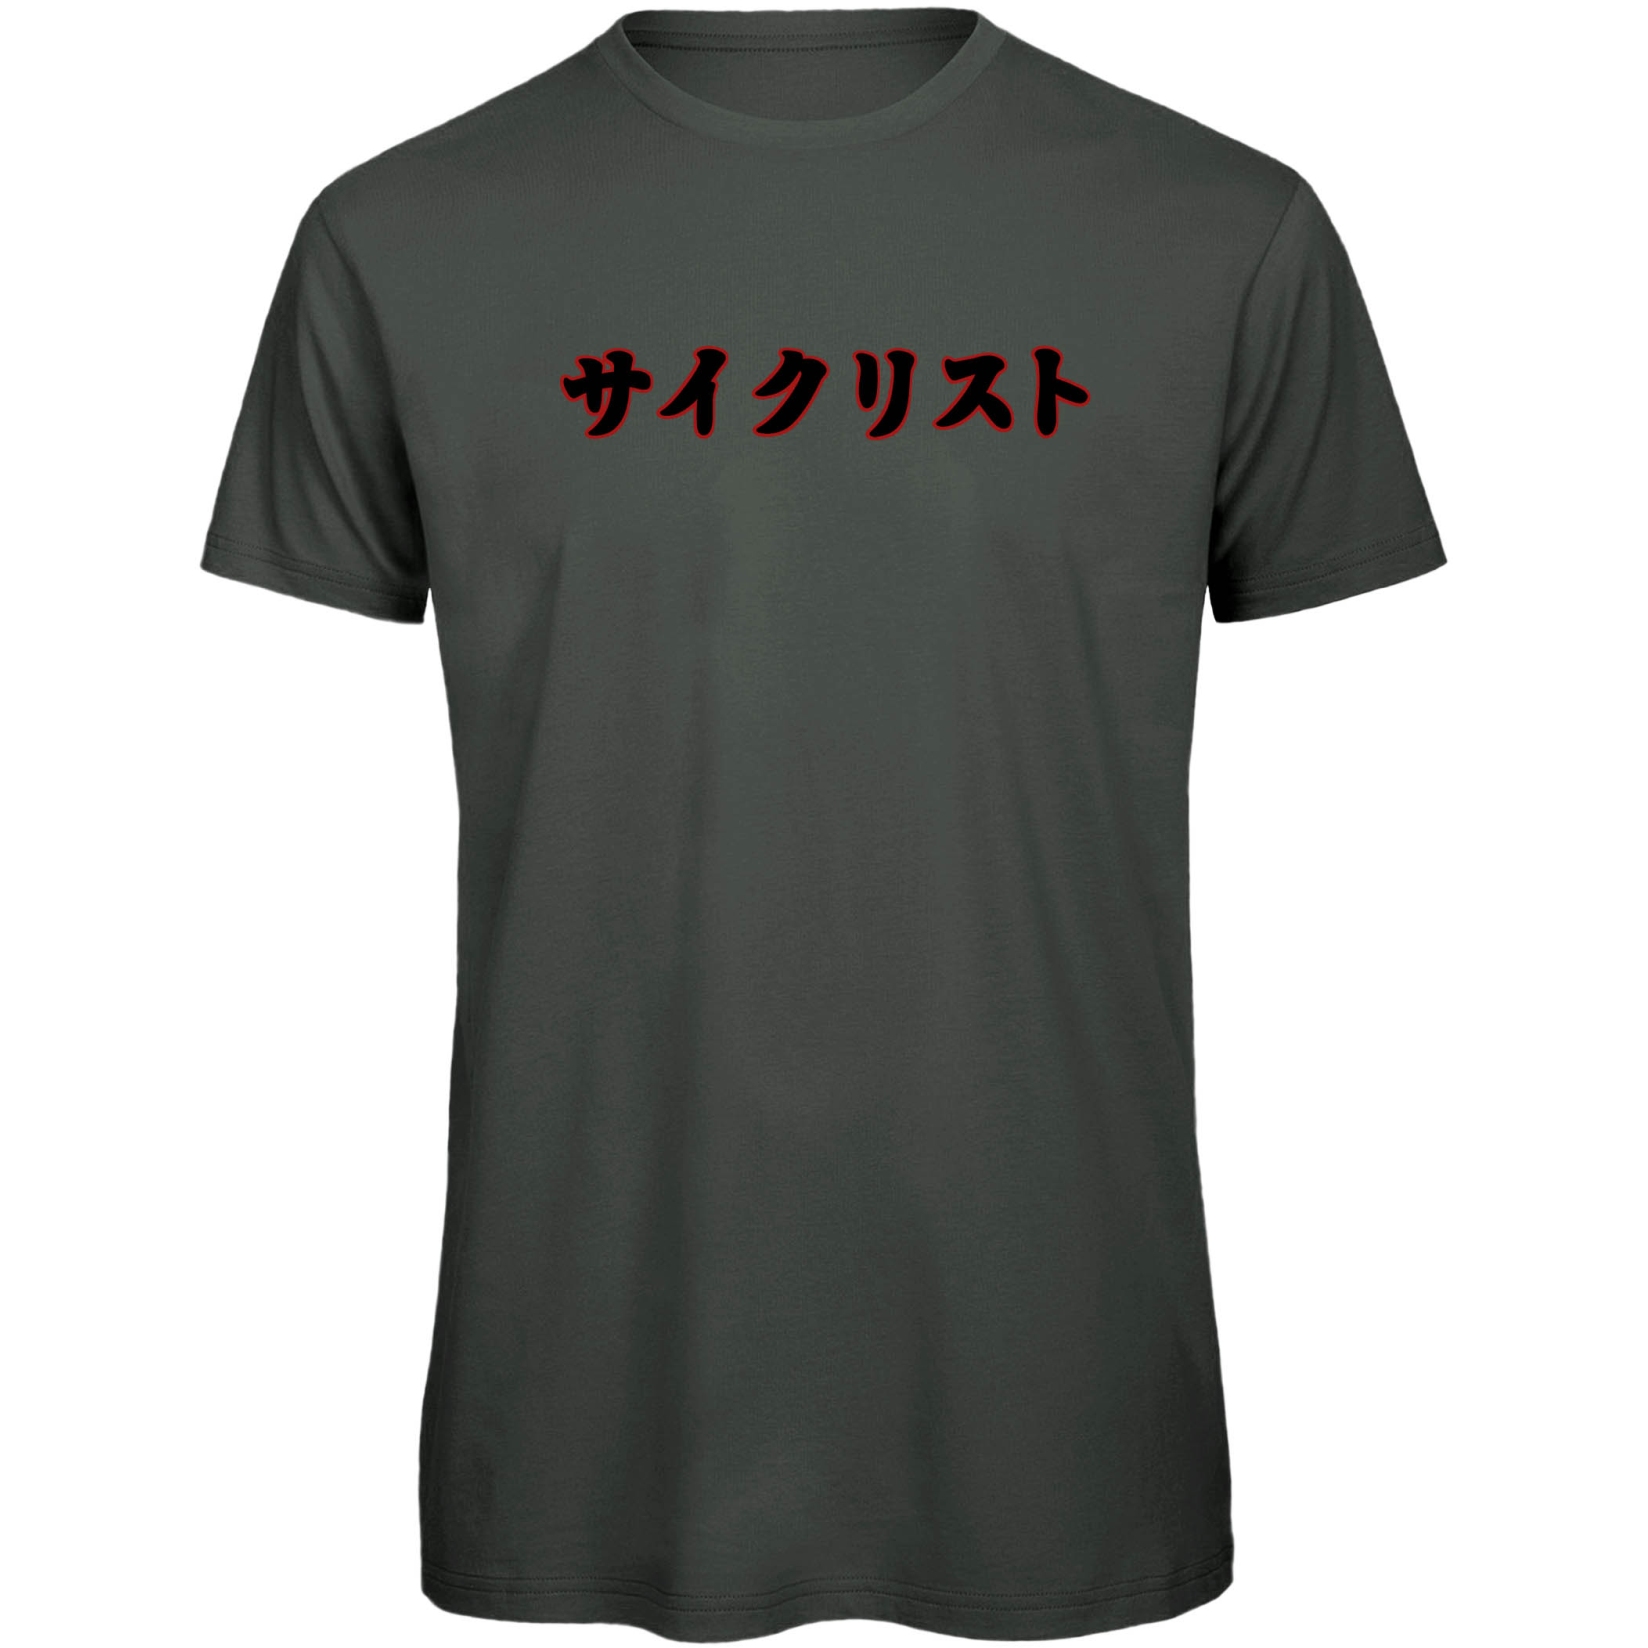 Foto de RTTshirts Camiseta Bicicleta - Saikurisuto - gris oscuro